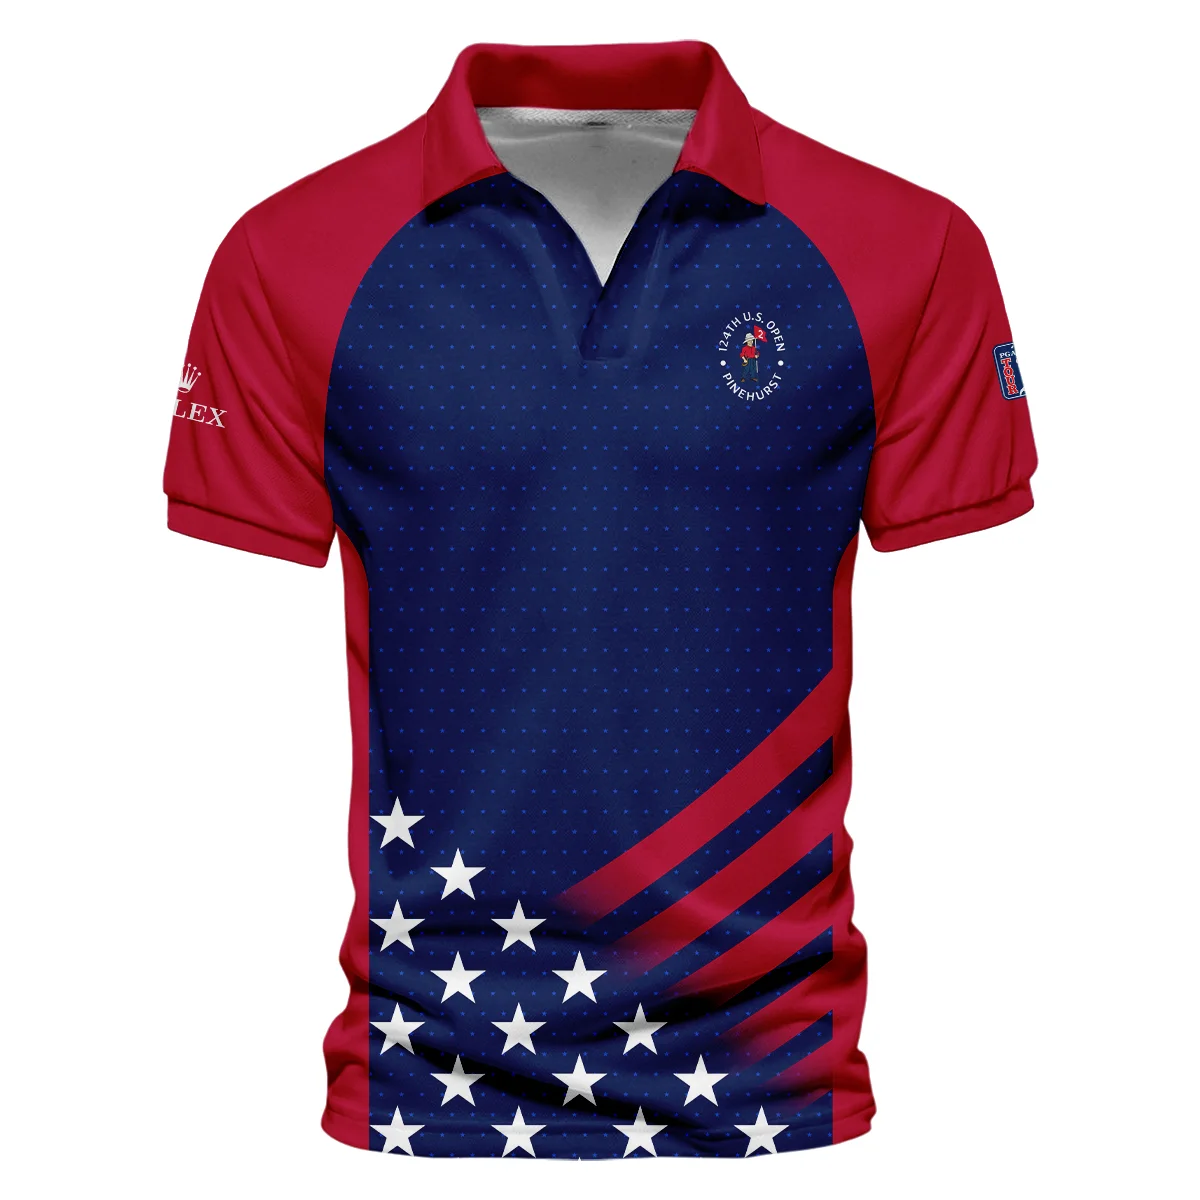 Rolex 124th U.S. Open Pinehurst Star White Dark Blue Red Background Polo Shirt Mandarin Collar Polo Shirt